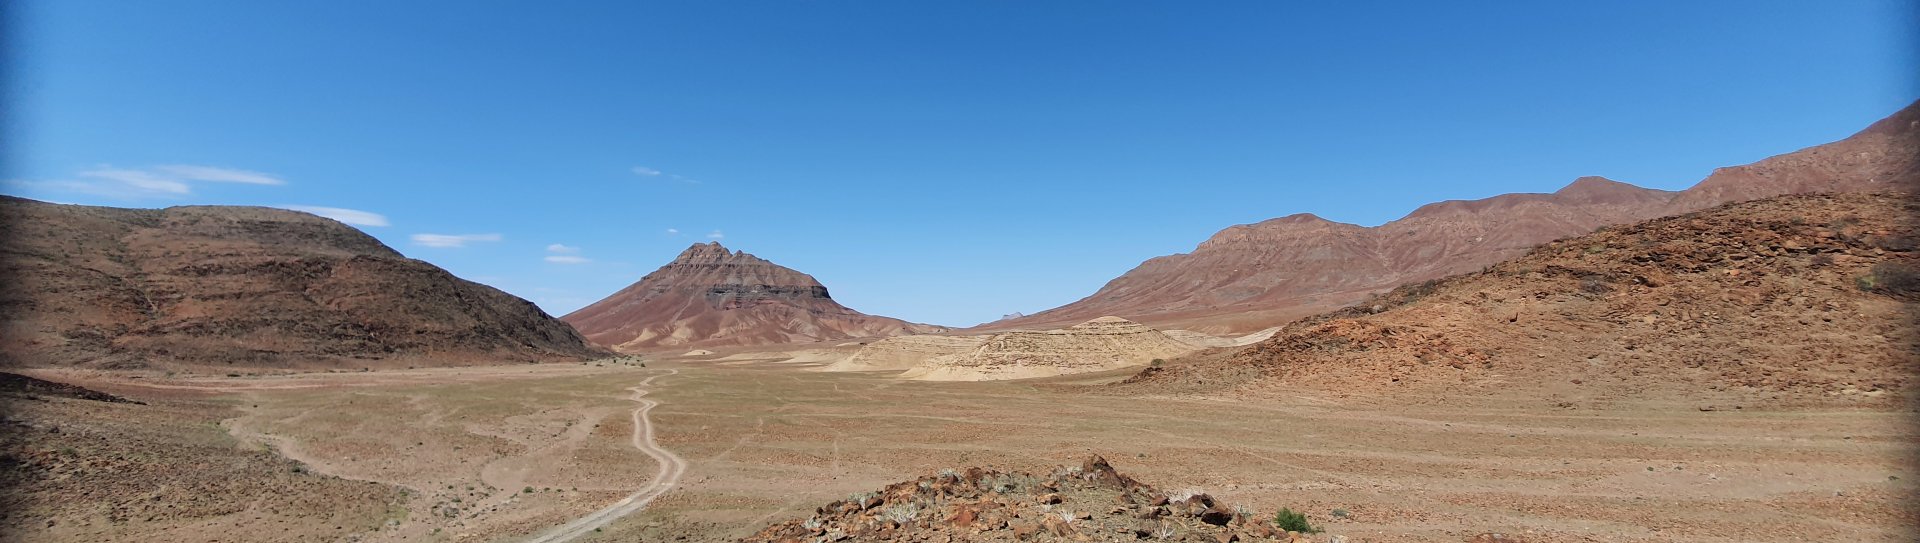 bushbundu-car-rental-windhoek-namibia-vehicle-rates-cover-image-namibia-desert-with-rock-formations